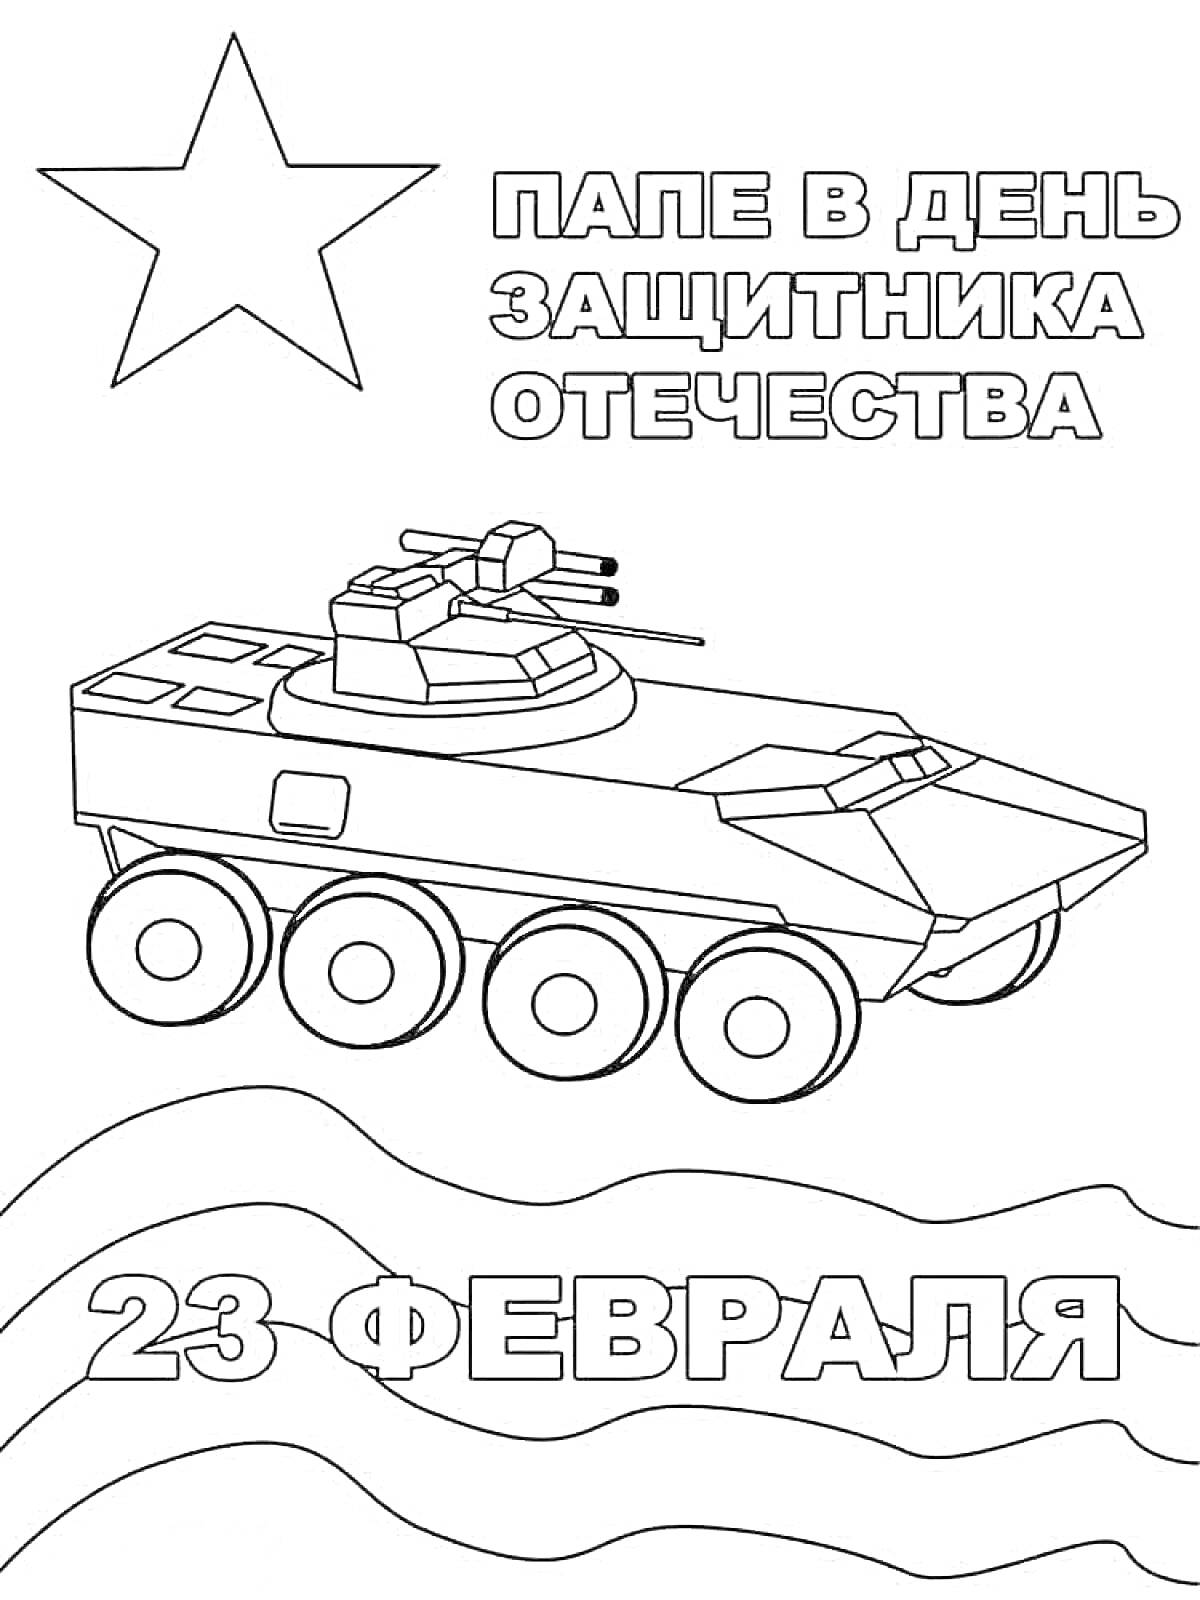 Раскраска Военная техника на день Защитника Отечества: бронетранспортер с пушкой на колесах, звезда, текст 